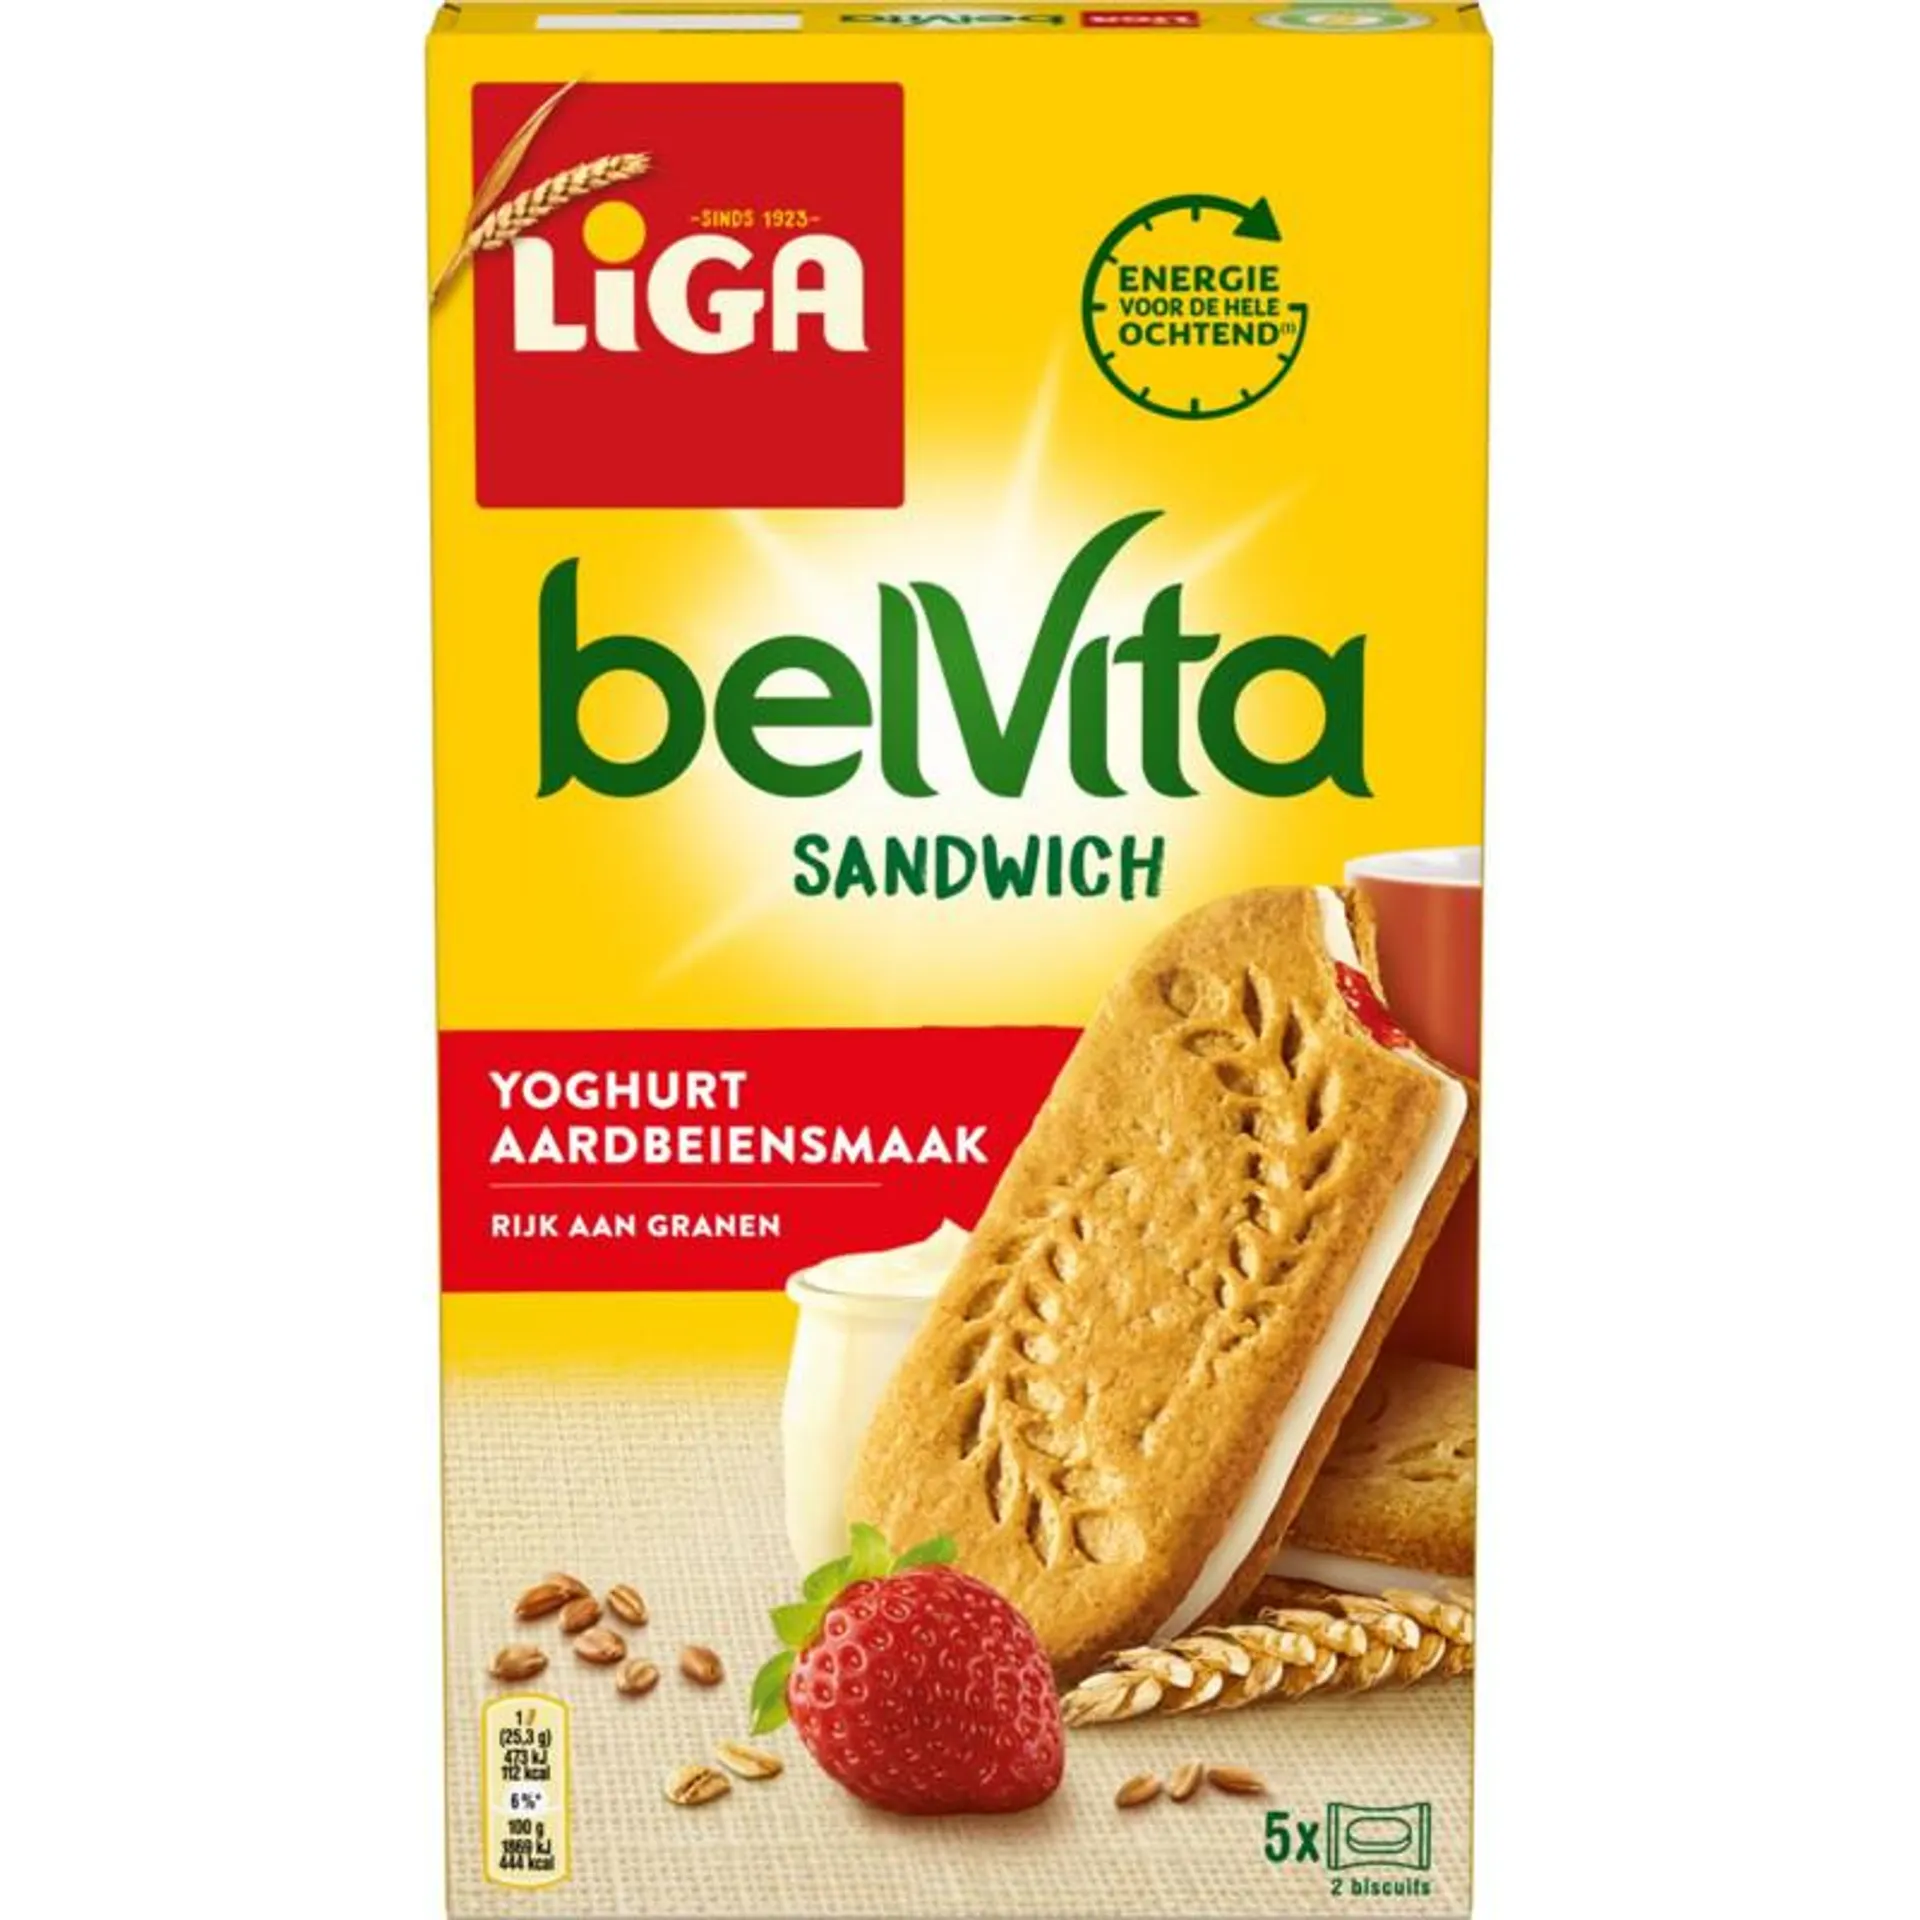 Liga Belvita sandwich yoghurt aardbeiensmaak